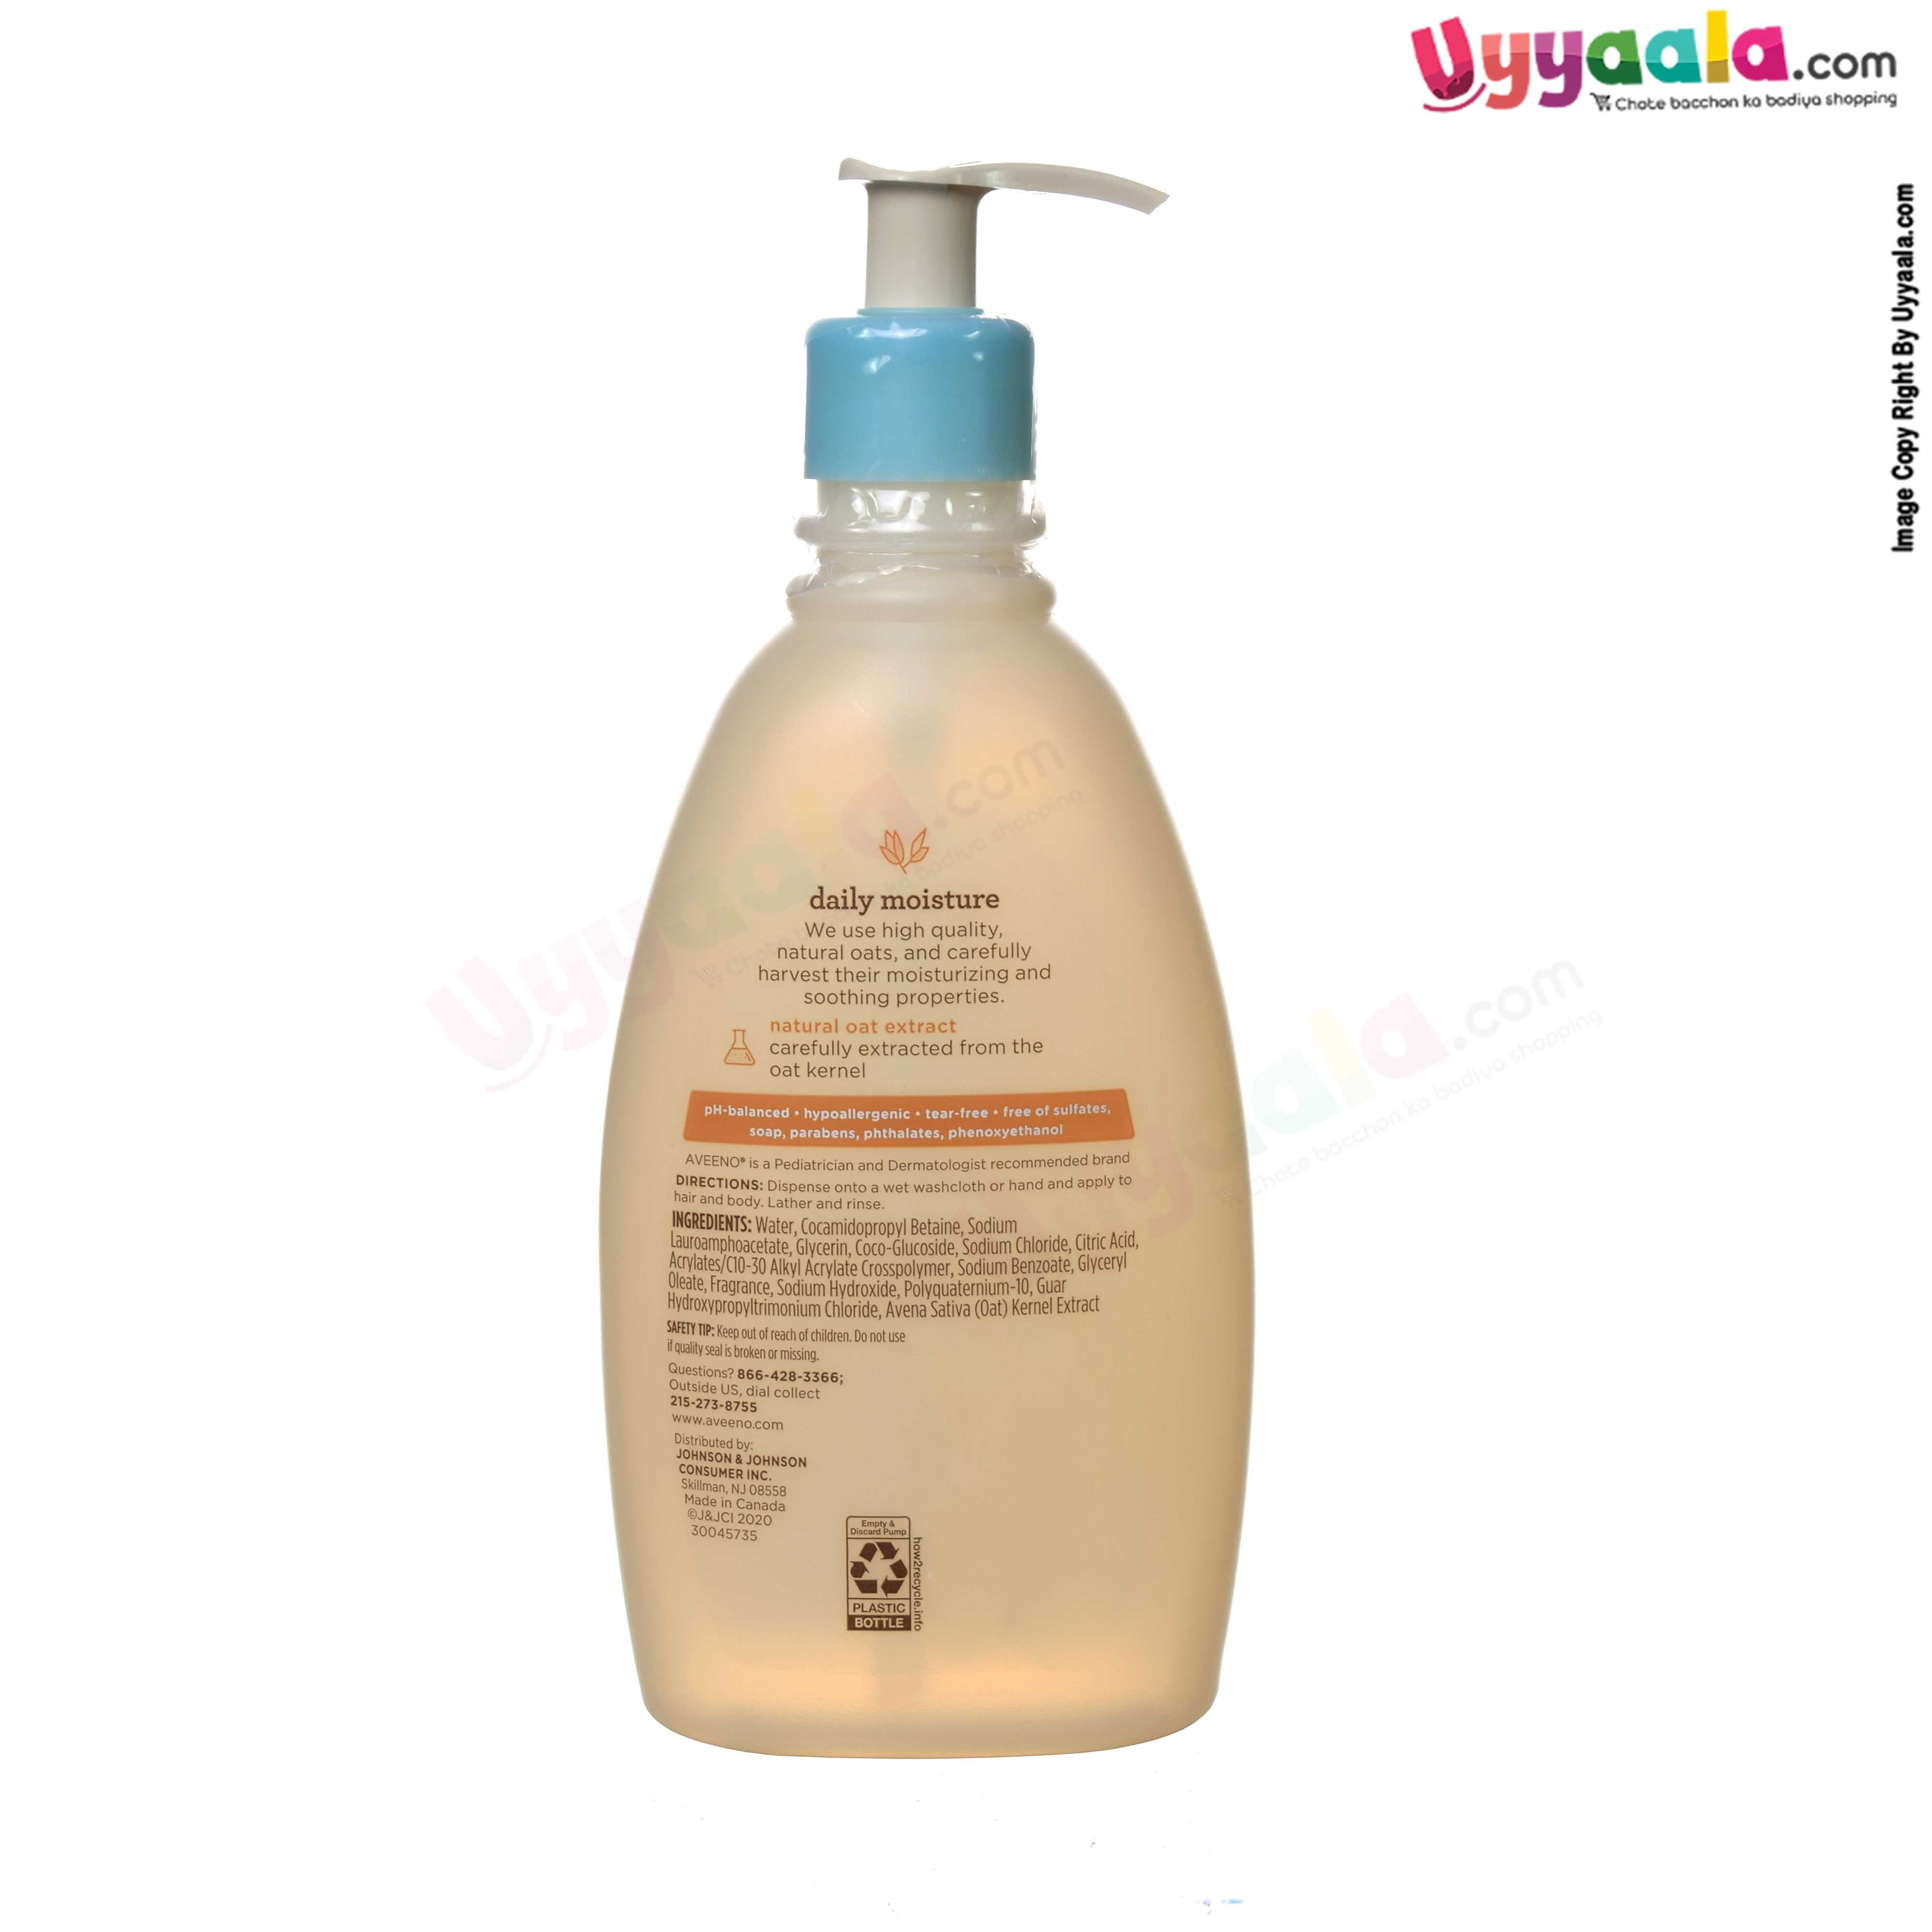 Daily moisture wash & shampoo for babies